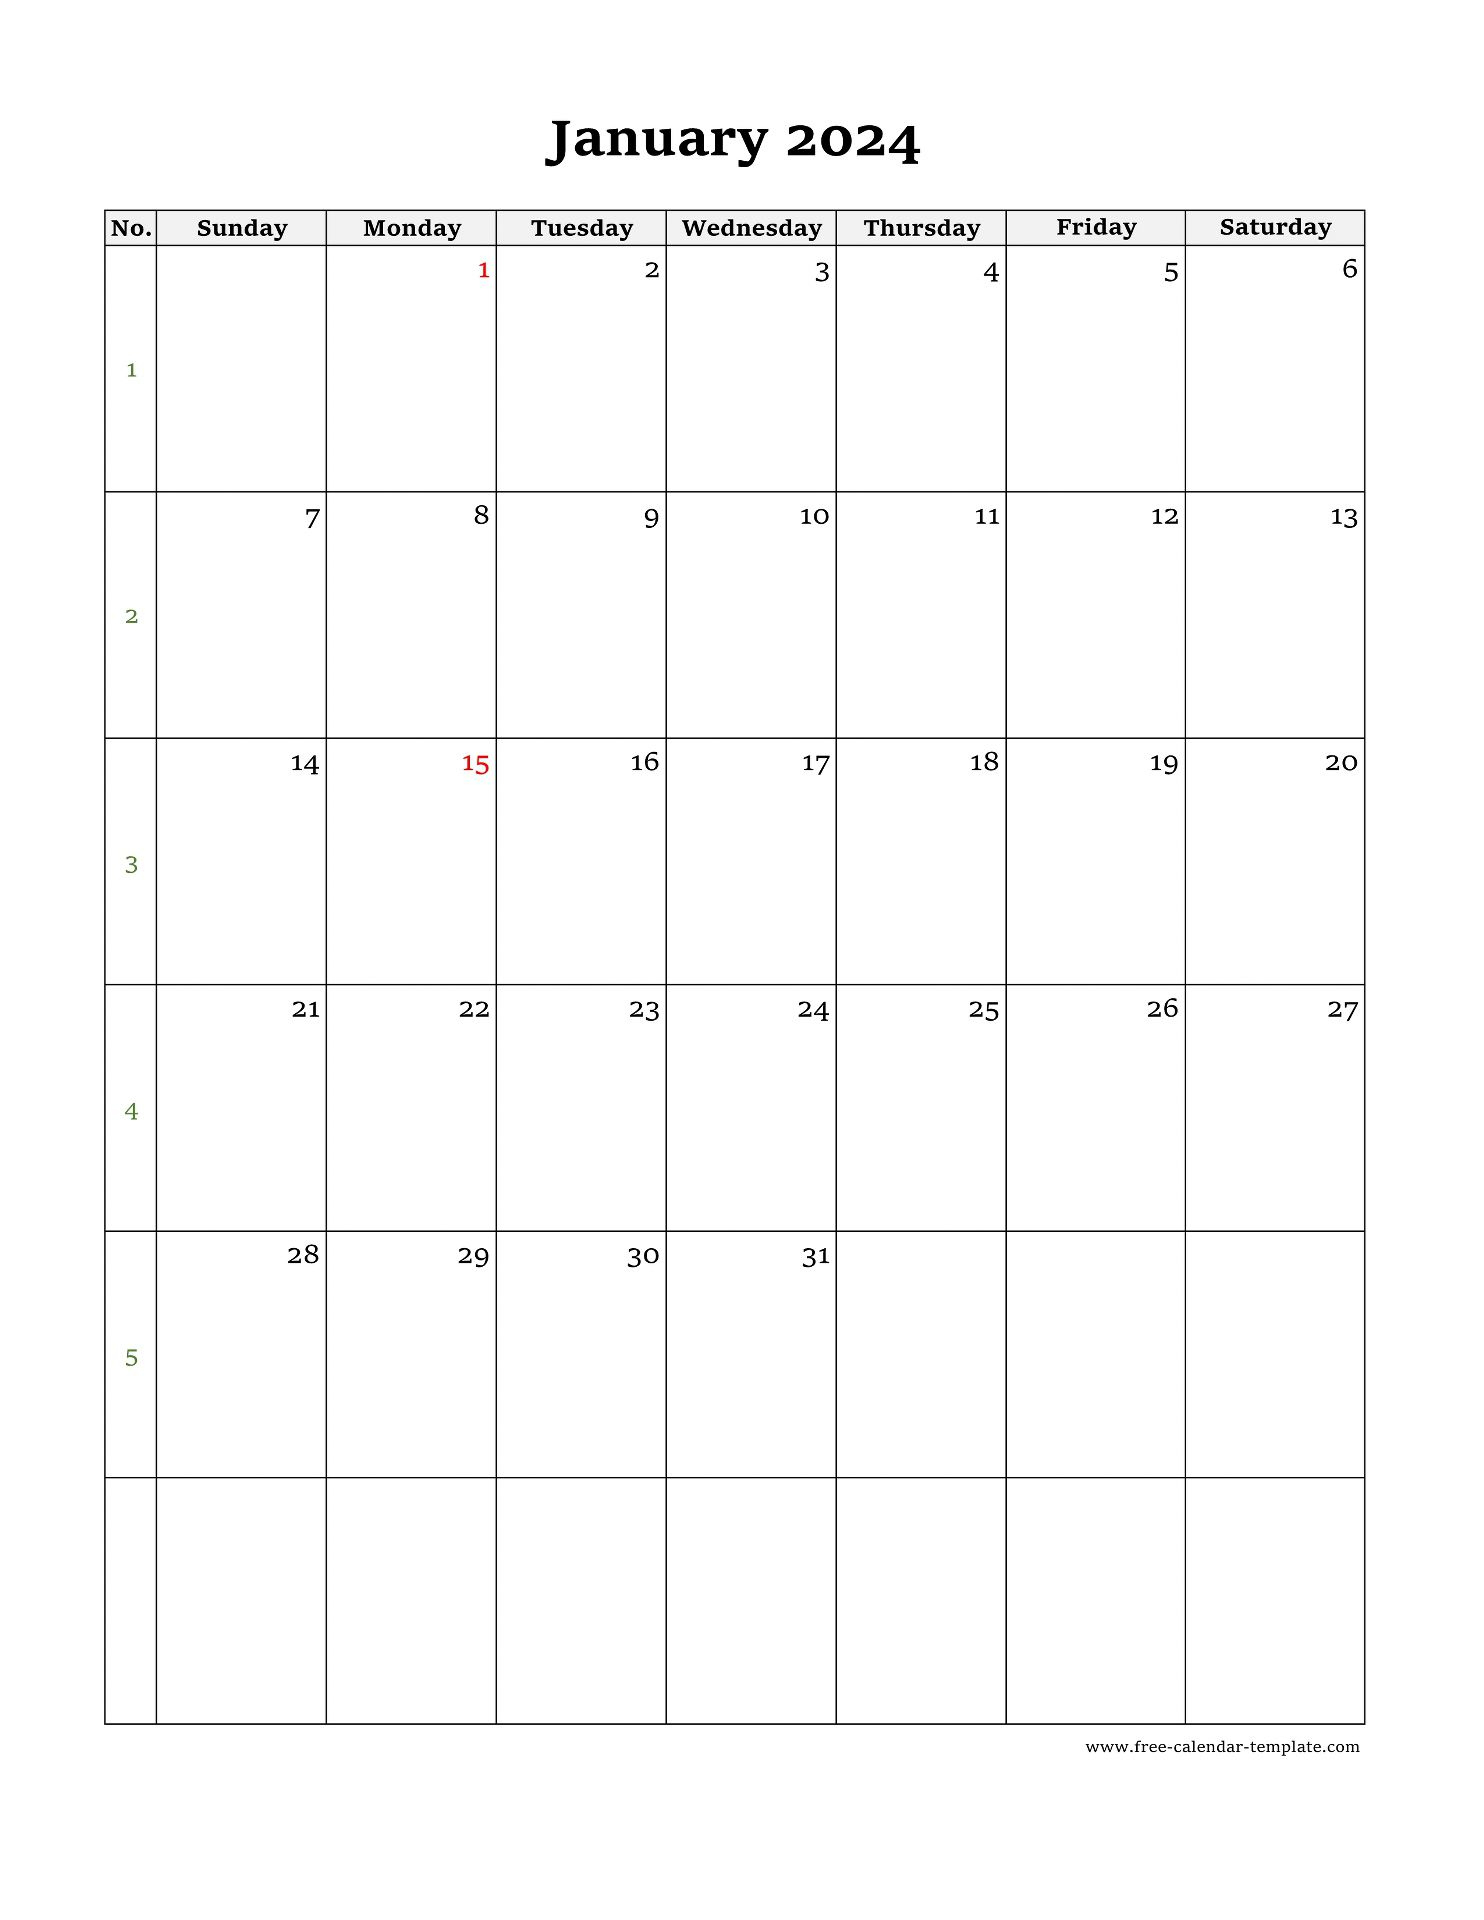 January Calendar 2024 Simple Design With Large Box On Each Day For | January 2024 Calendar Printable Vertical